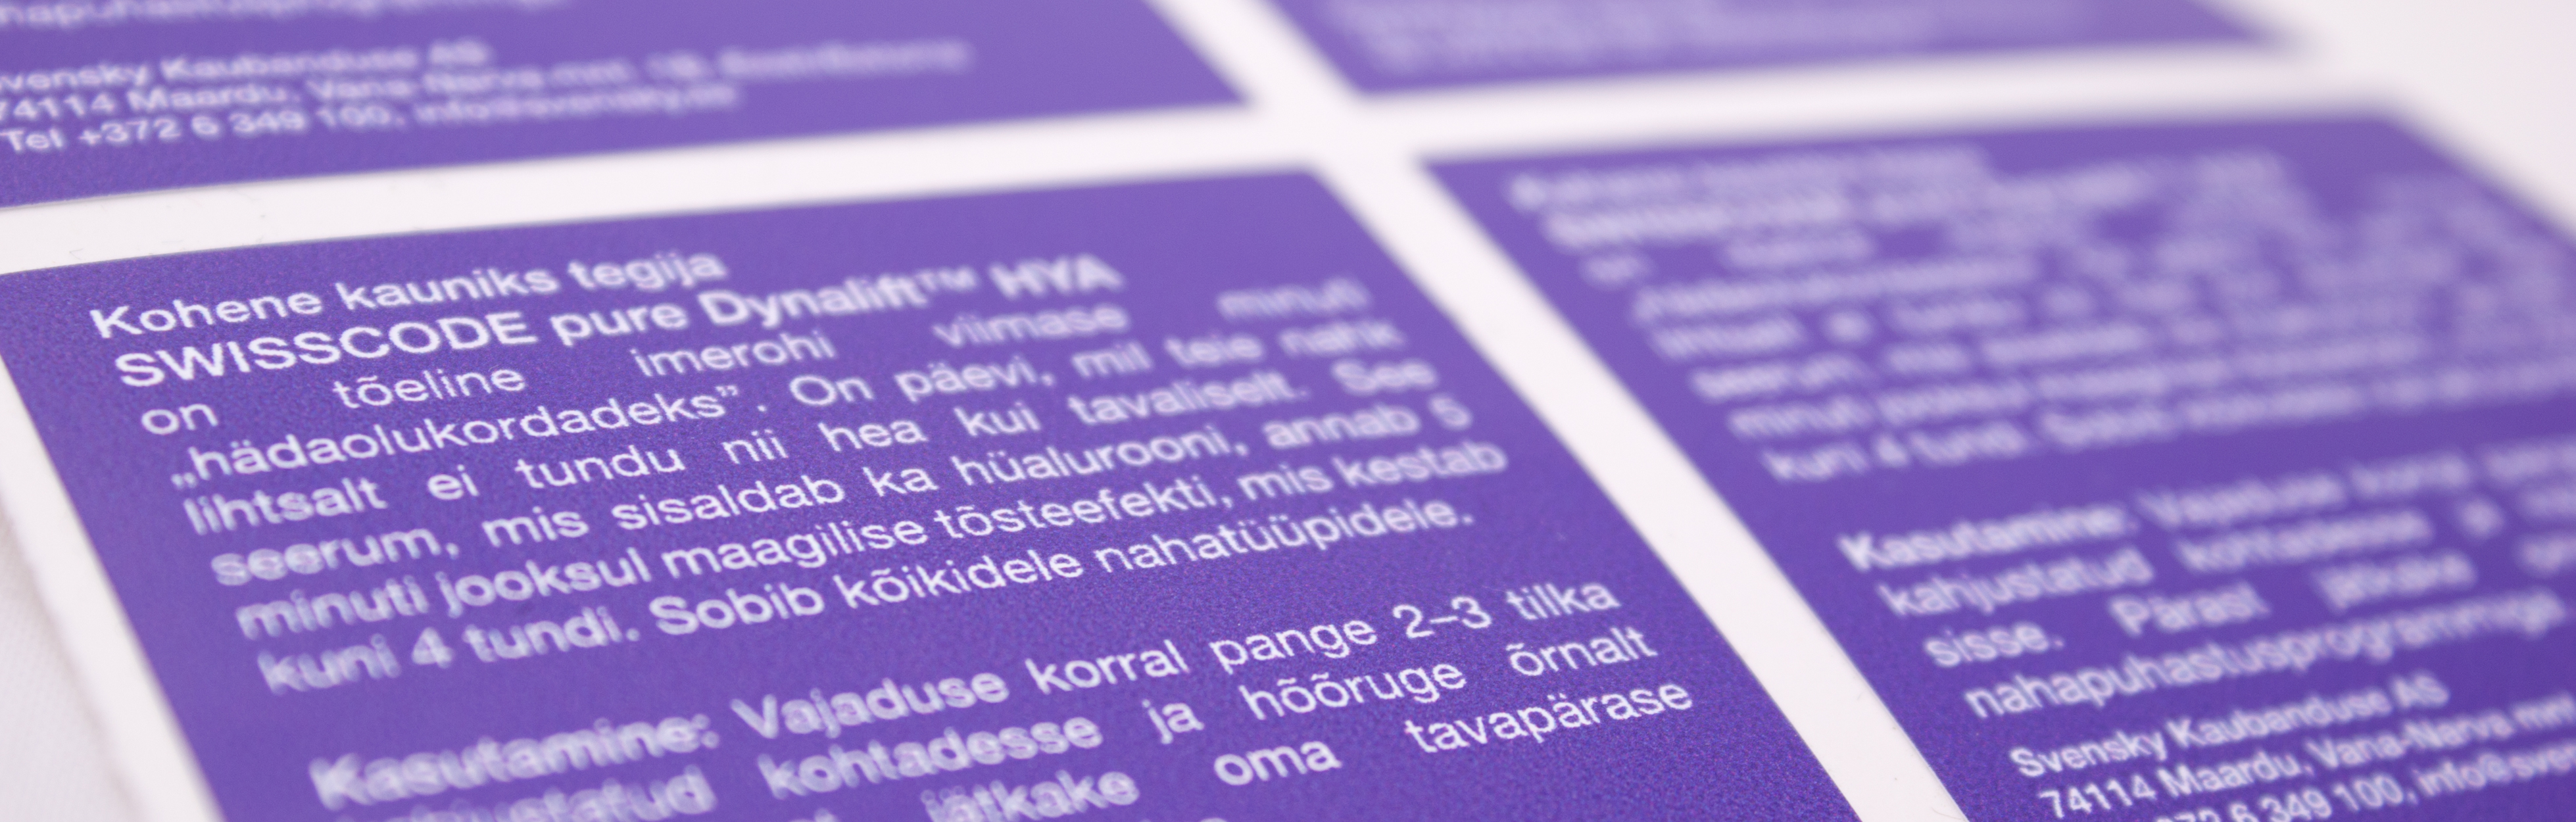 swisscode stickers digital print purple banner